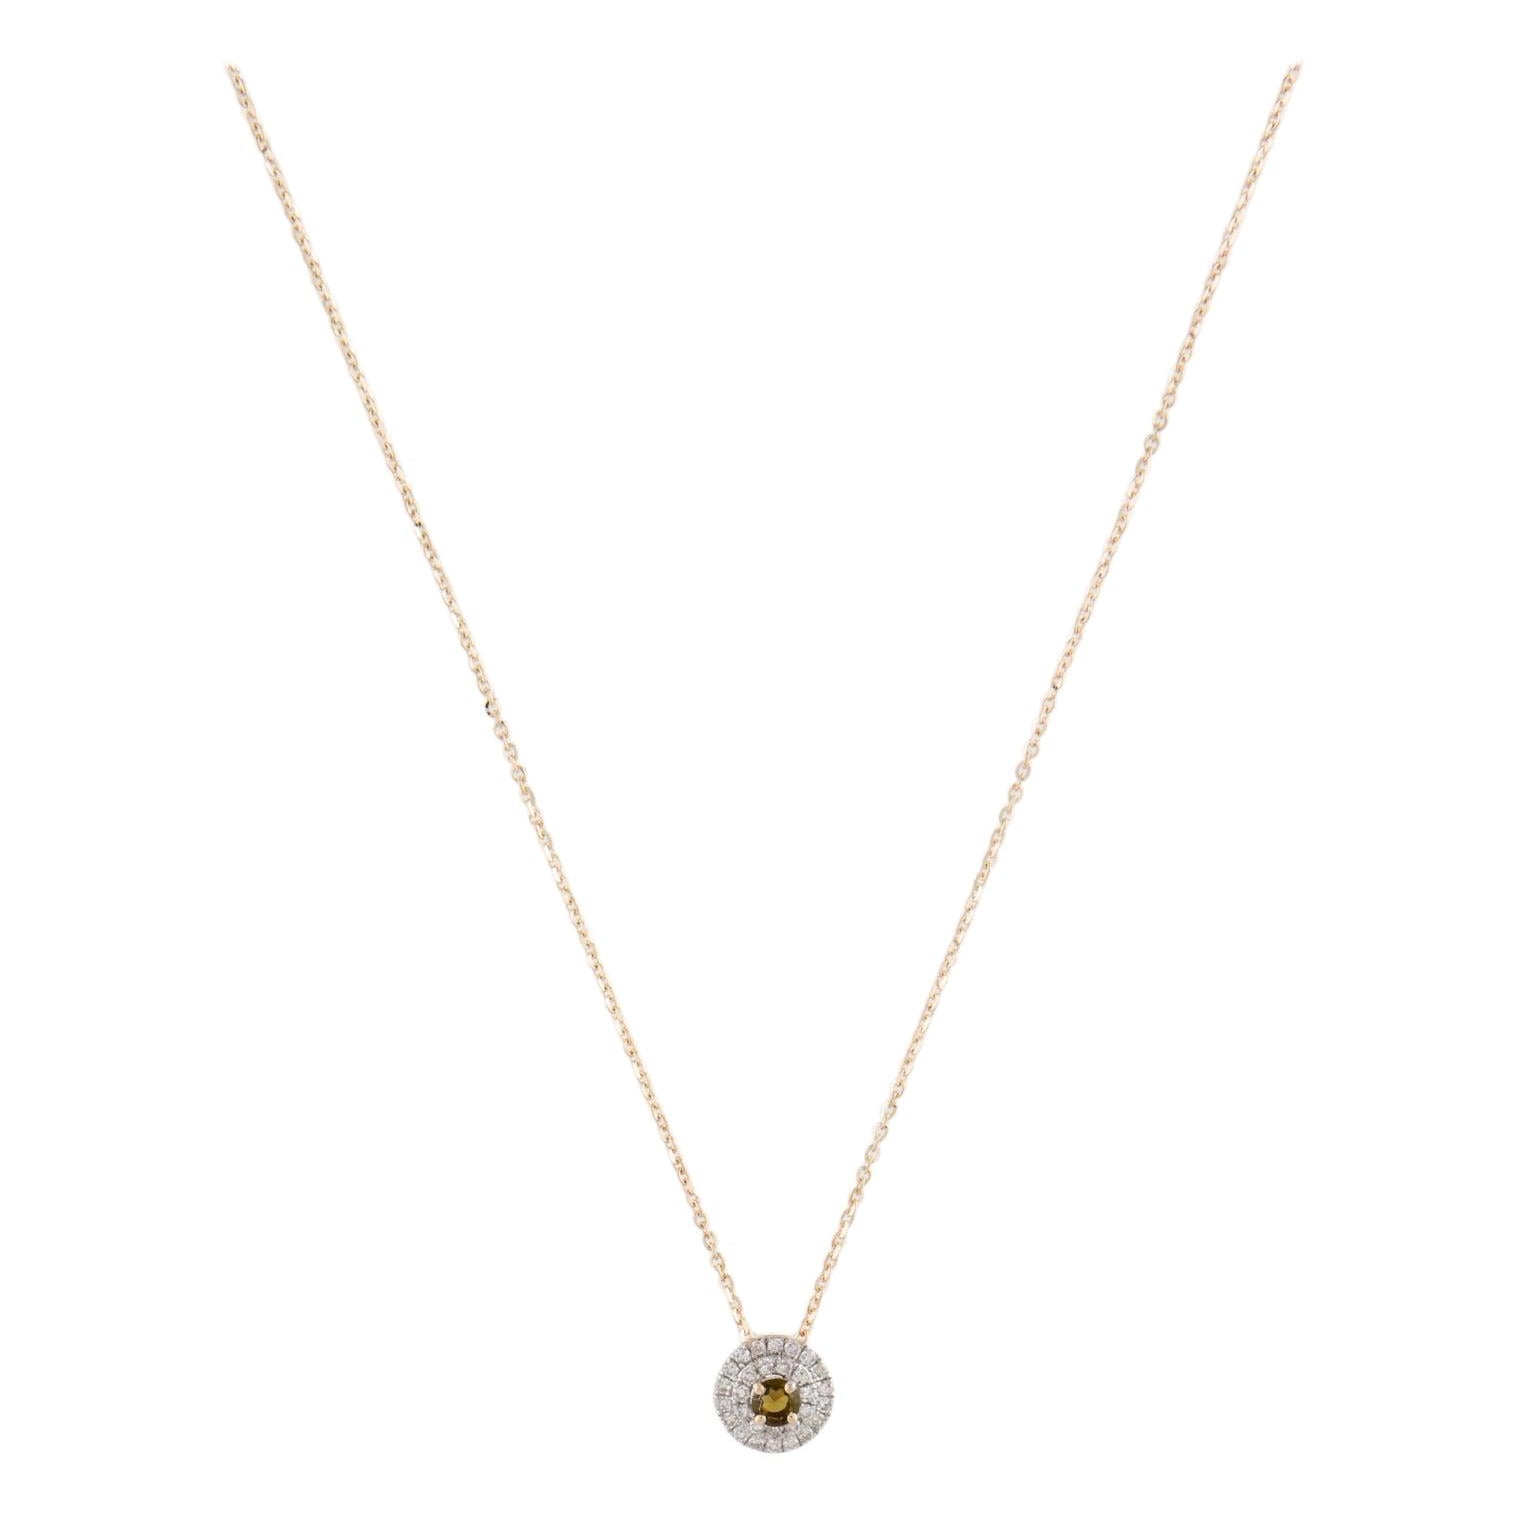 Exquisite 14K Tourmaline & Diamond Pendant Necklace: Timeless Elegance, Luxury For Sale